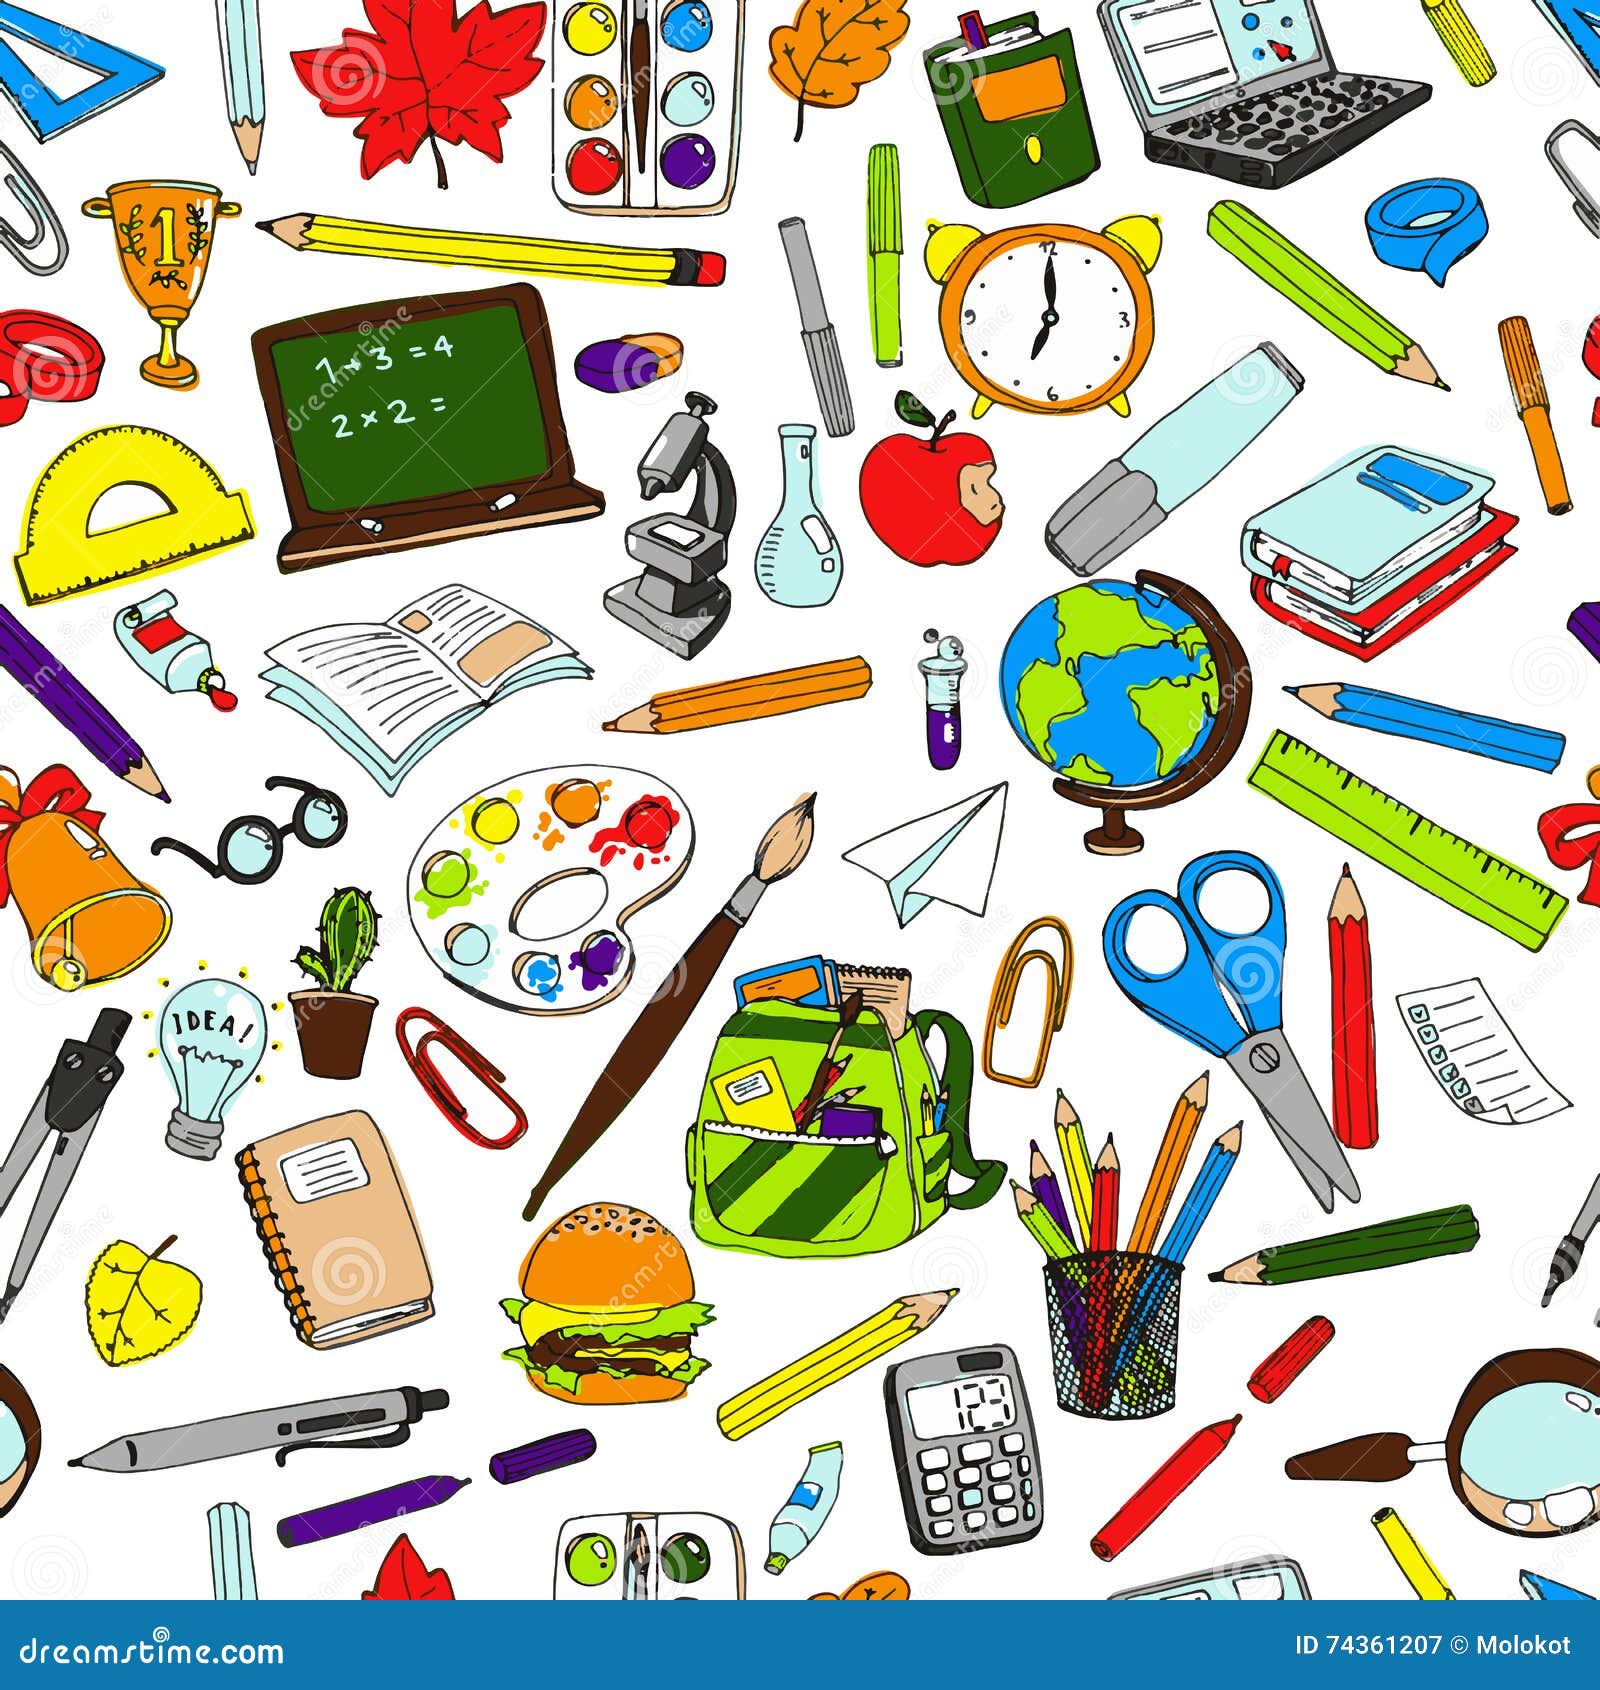 https://thumbs.dreamstime.com/z/seamless-pattern-school-supplies-colorful-illustration-doodle-art-74361207.jpg